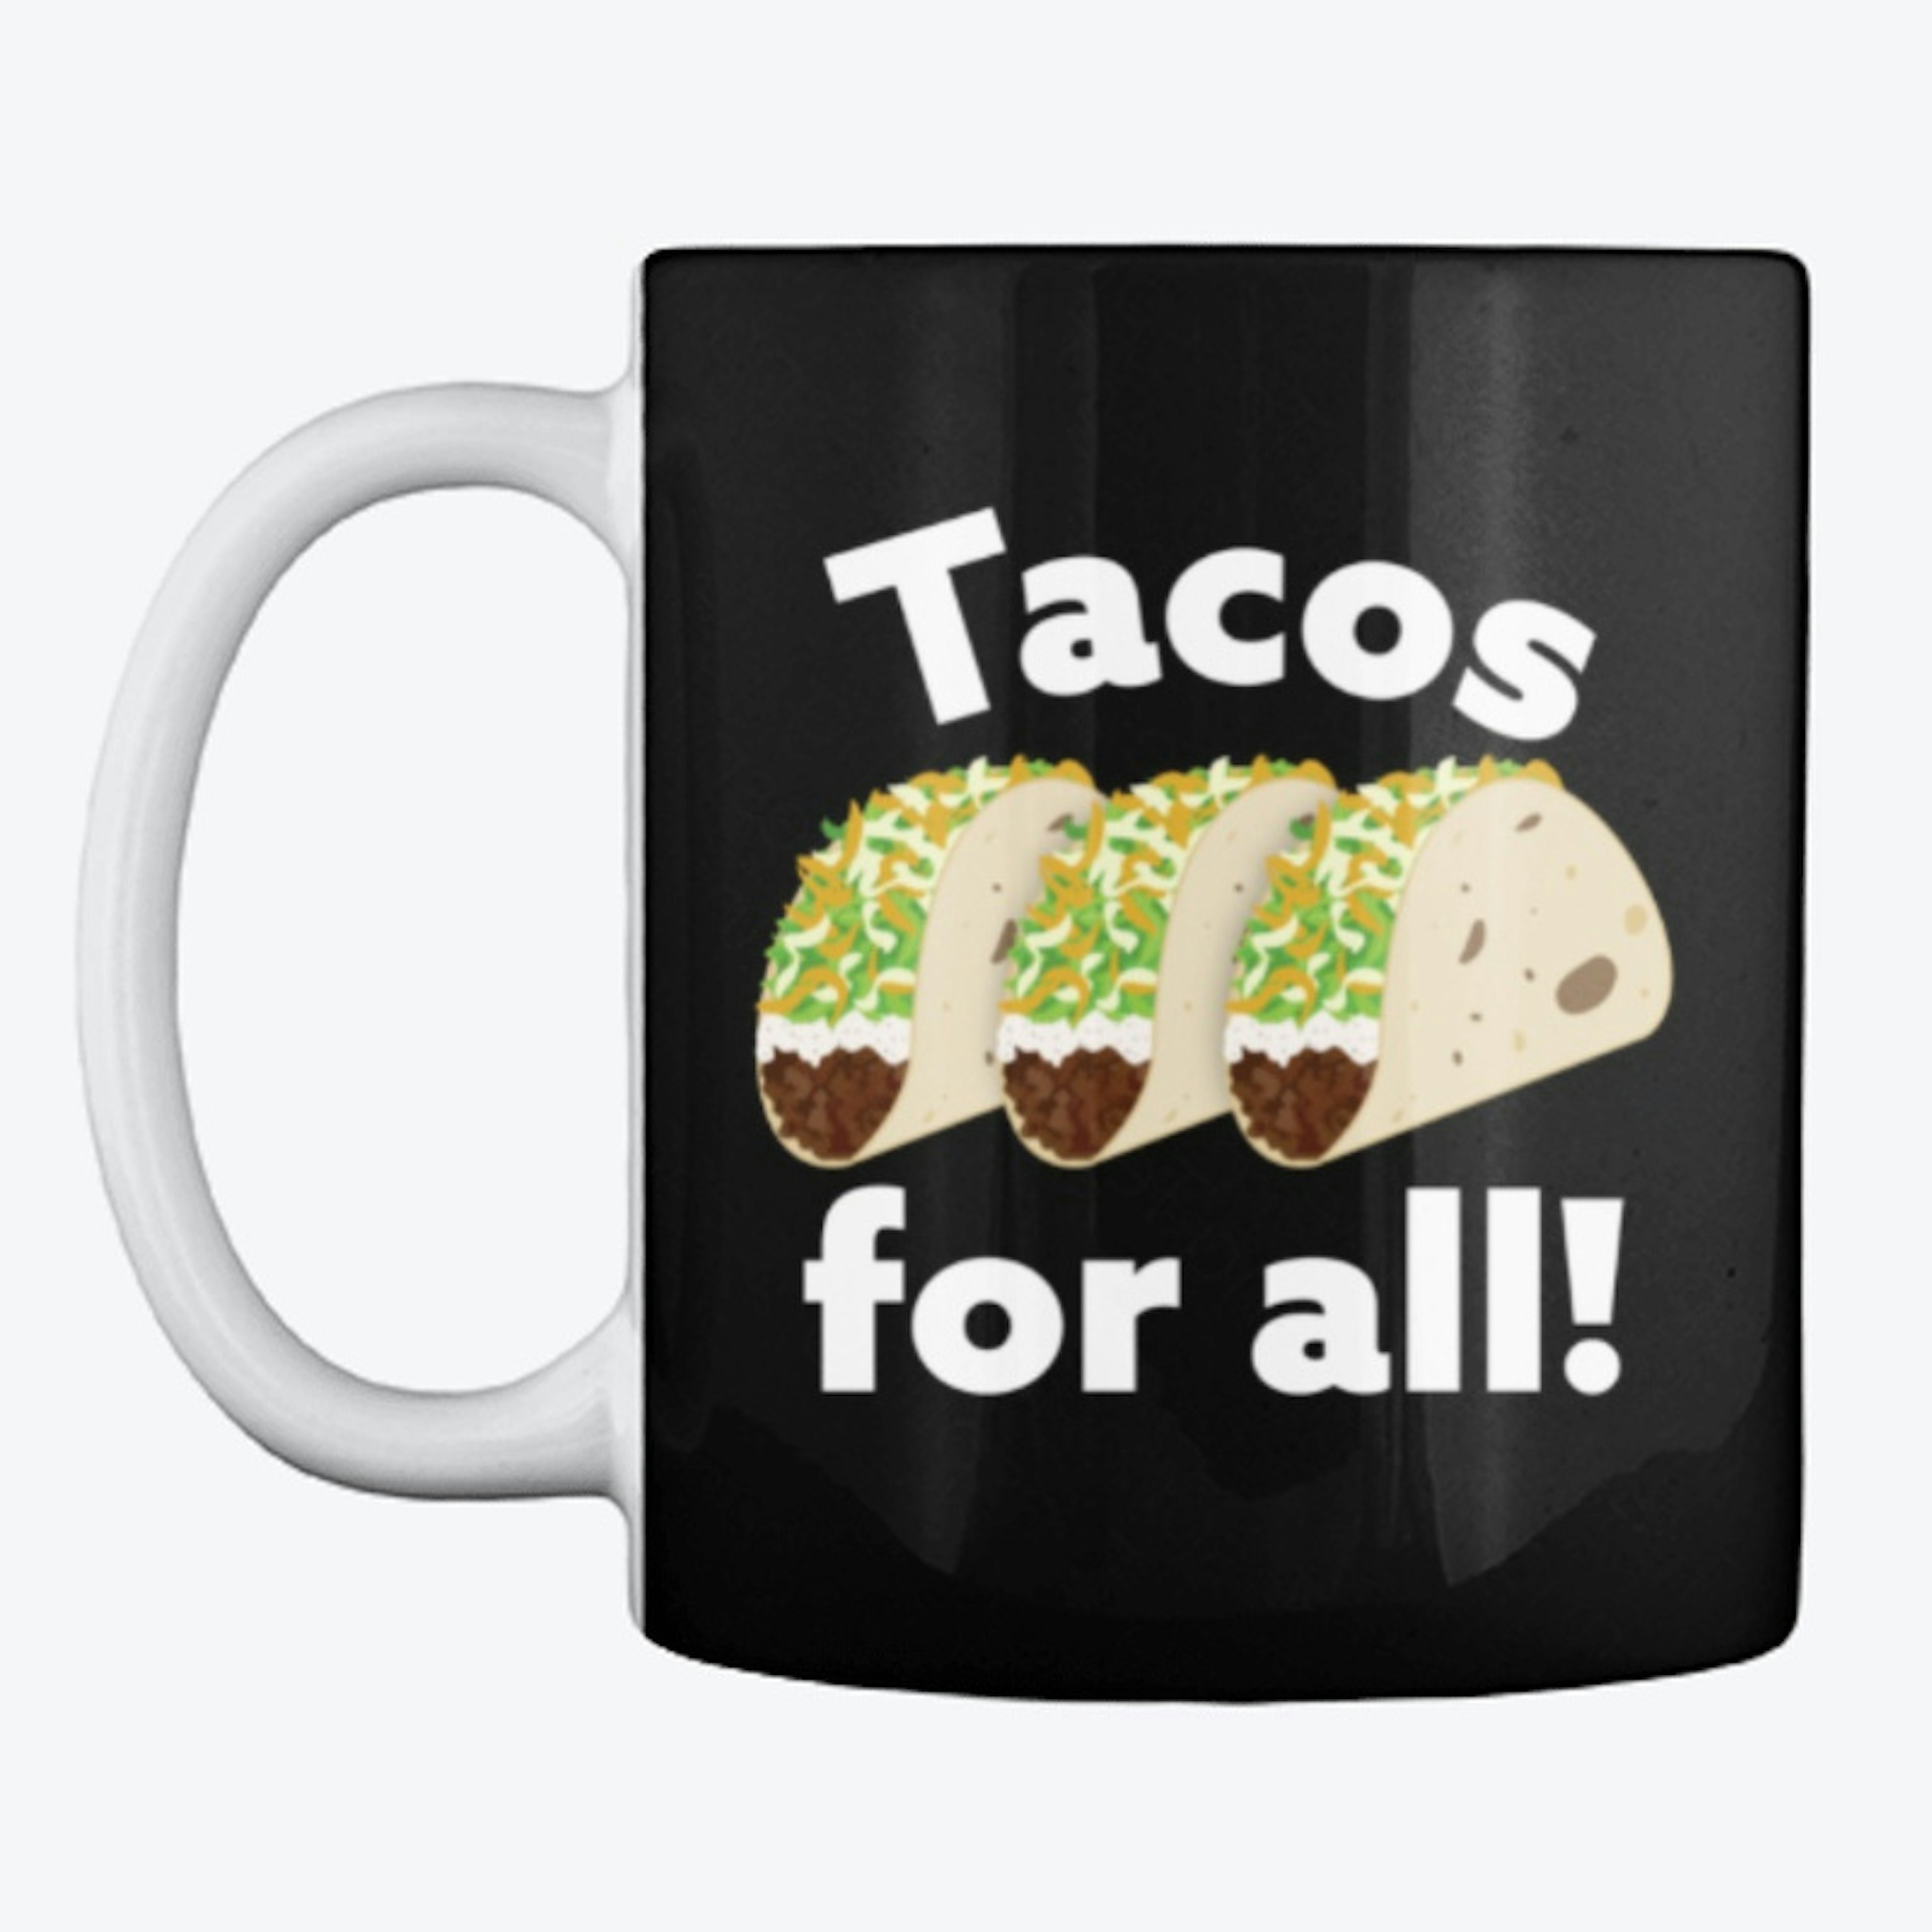 Tacos For All! (dark)